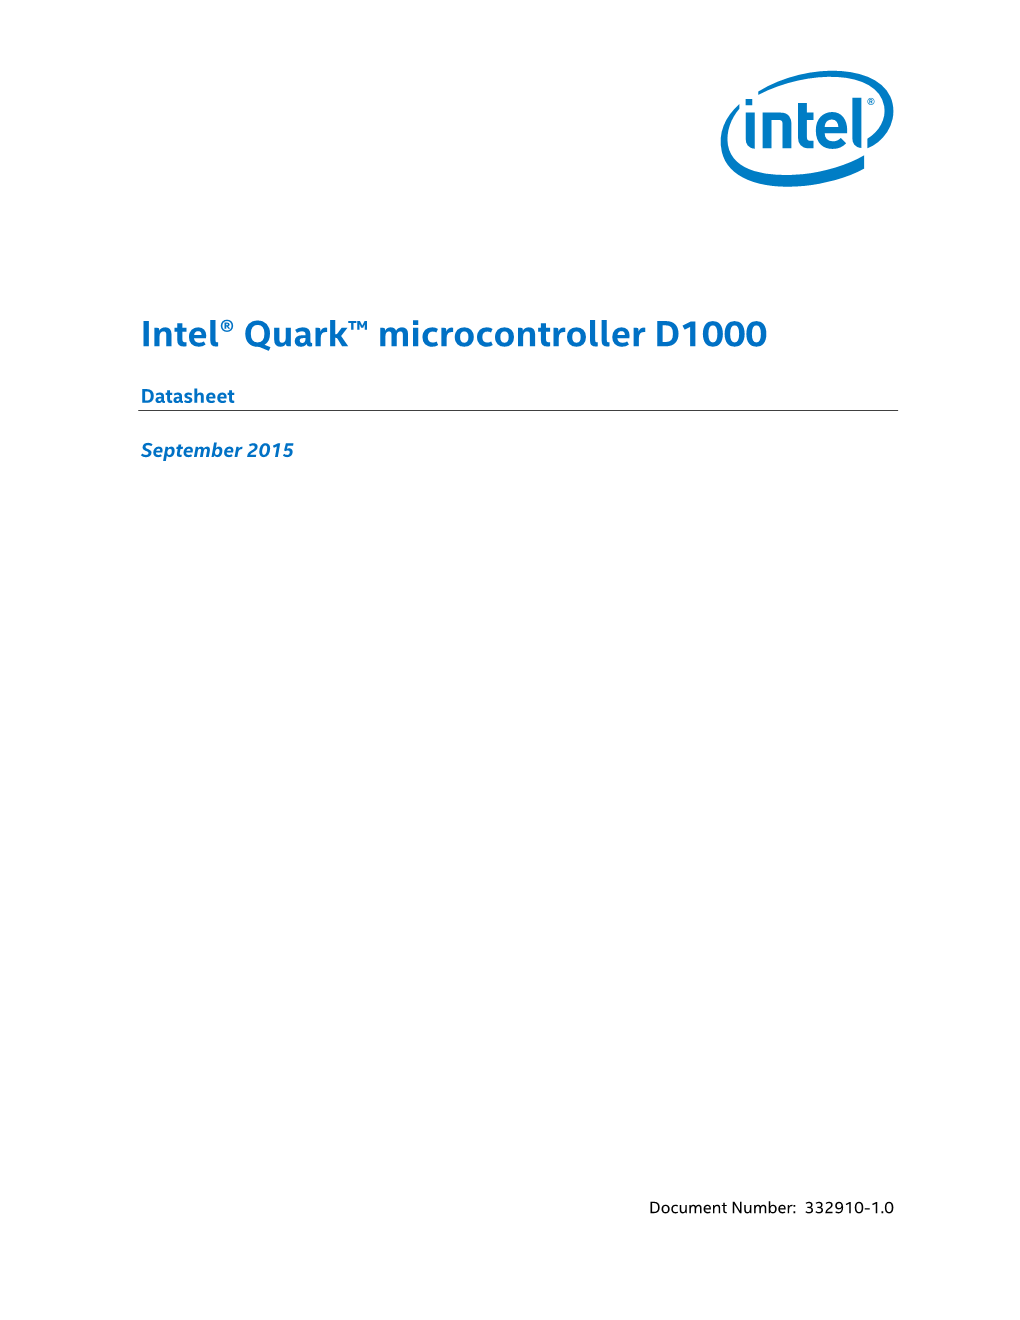 Intel Quark Microcontroller D1000 Datasheet